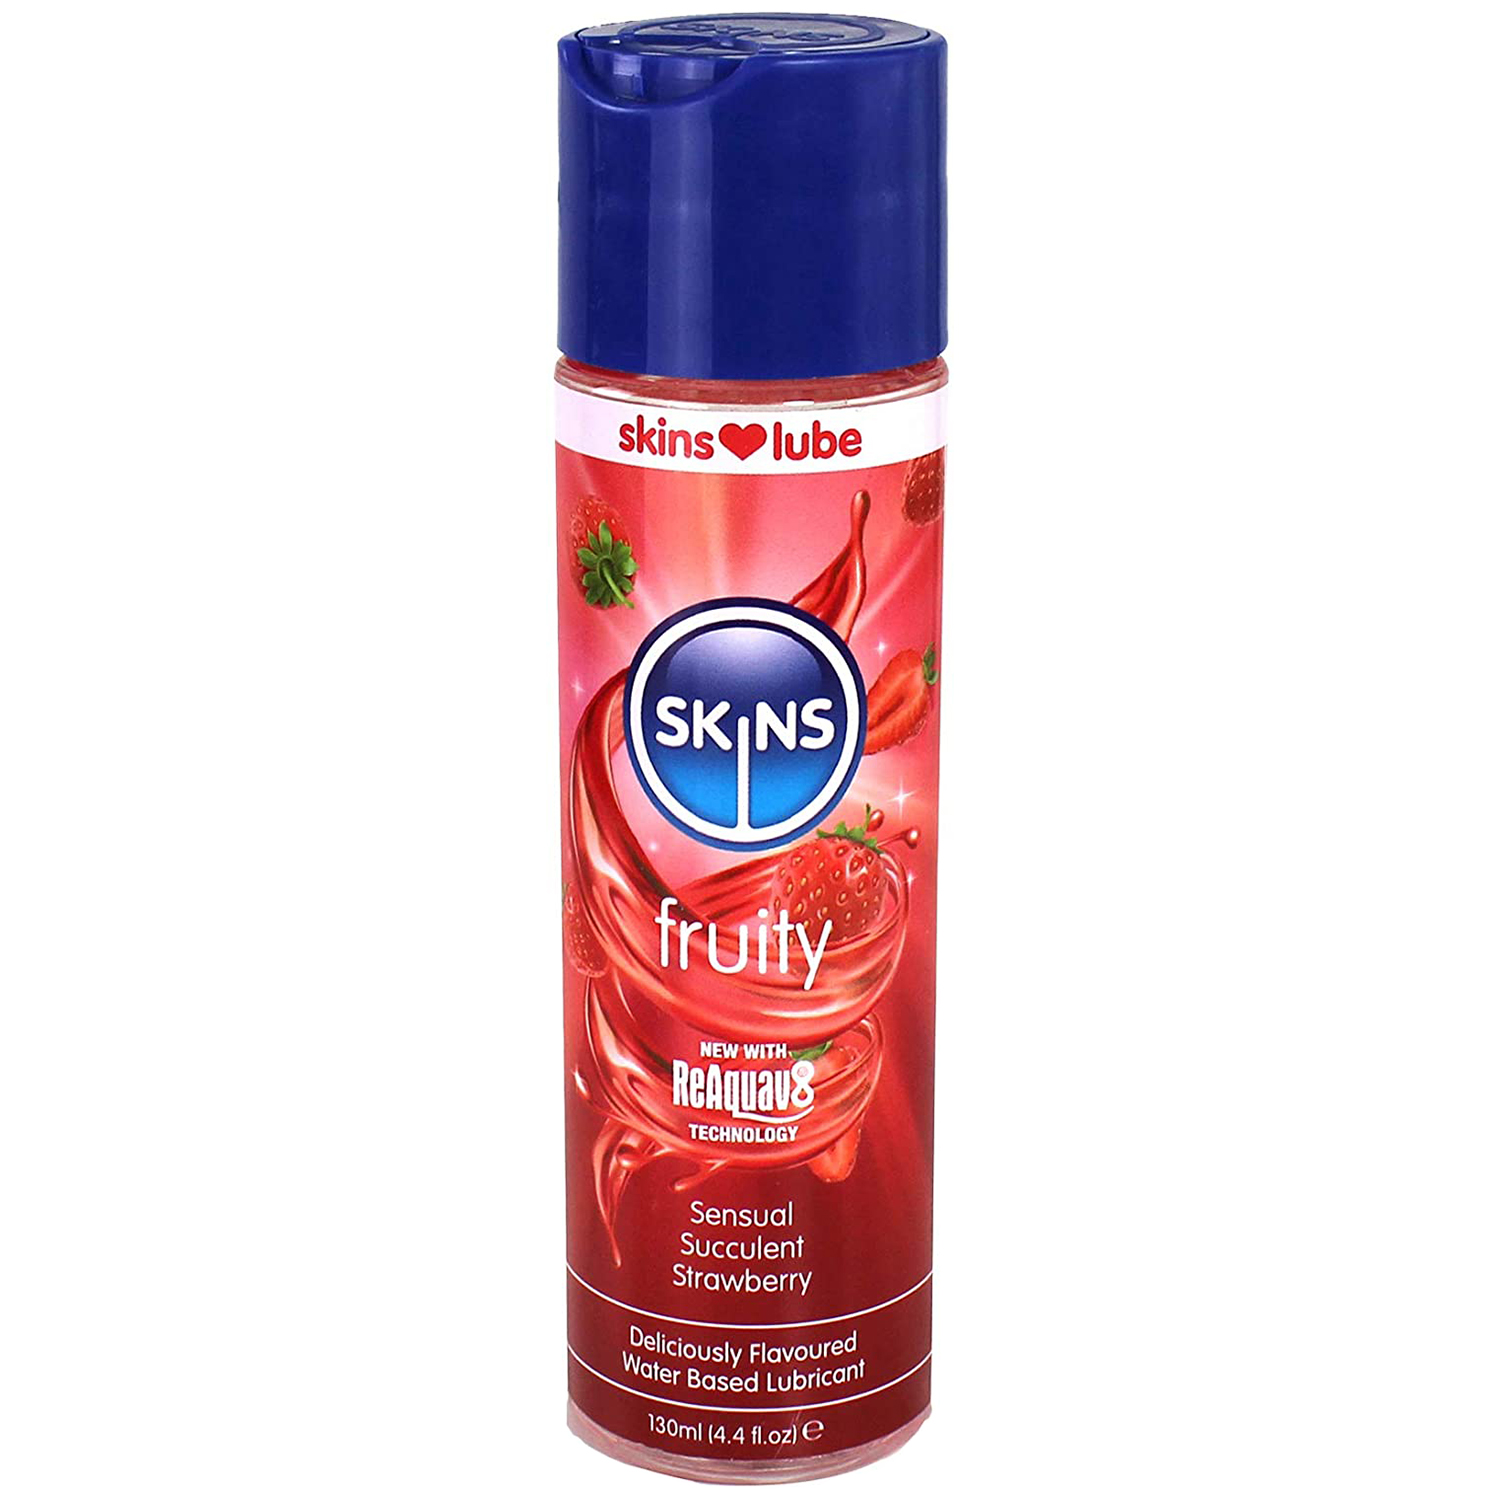 Skins Fruity Vandbaseret Glidecreme 130 ml     - Klar thumbnail